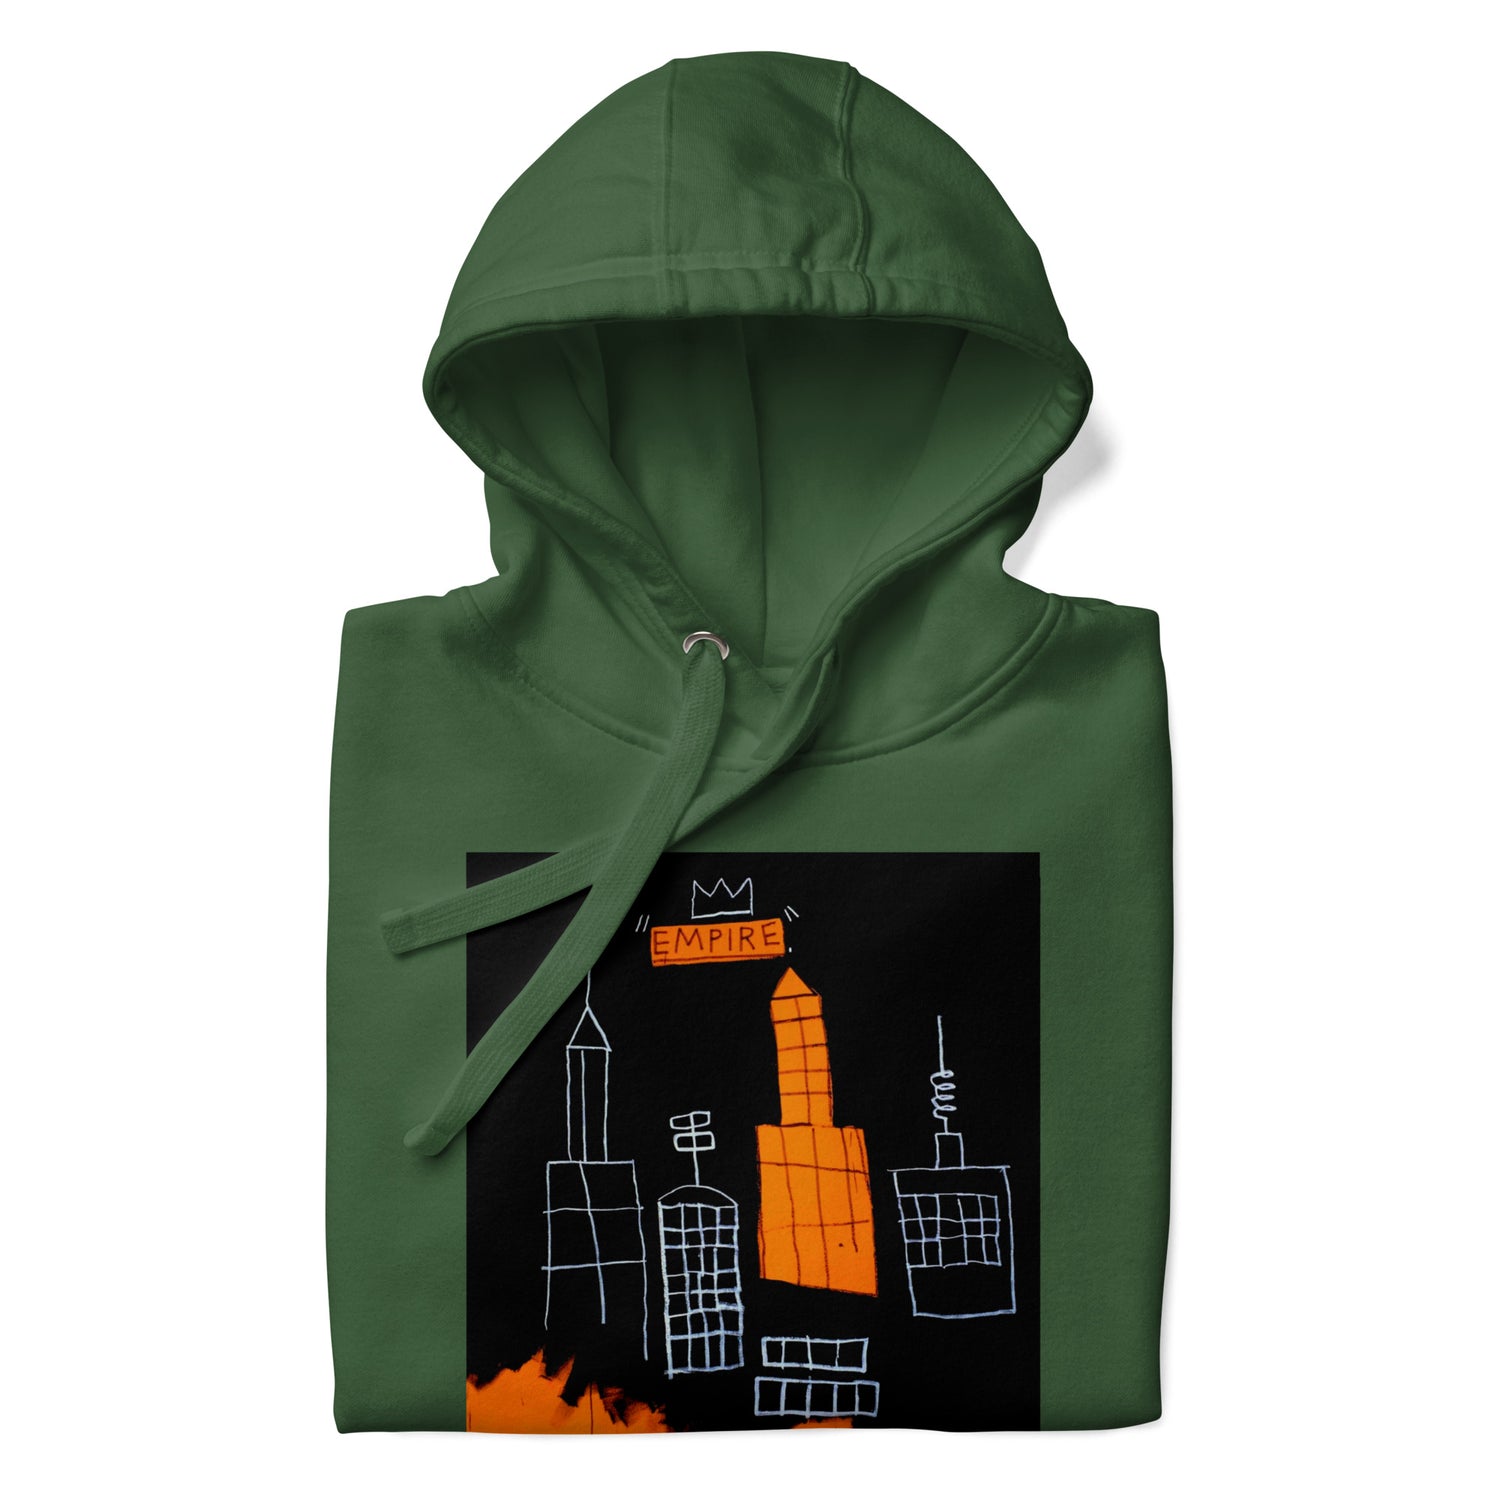 Jean-Michel Basquiat "Mecca" Artwork Printed Premium Streetwear Sweatshirt Hoodie Forest Green